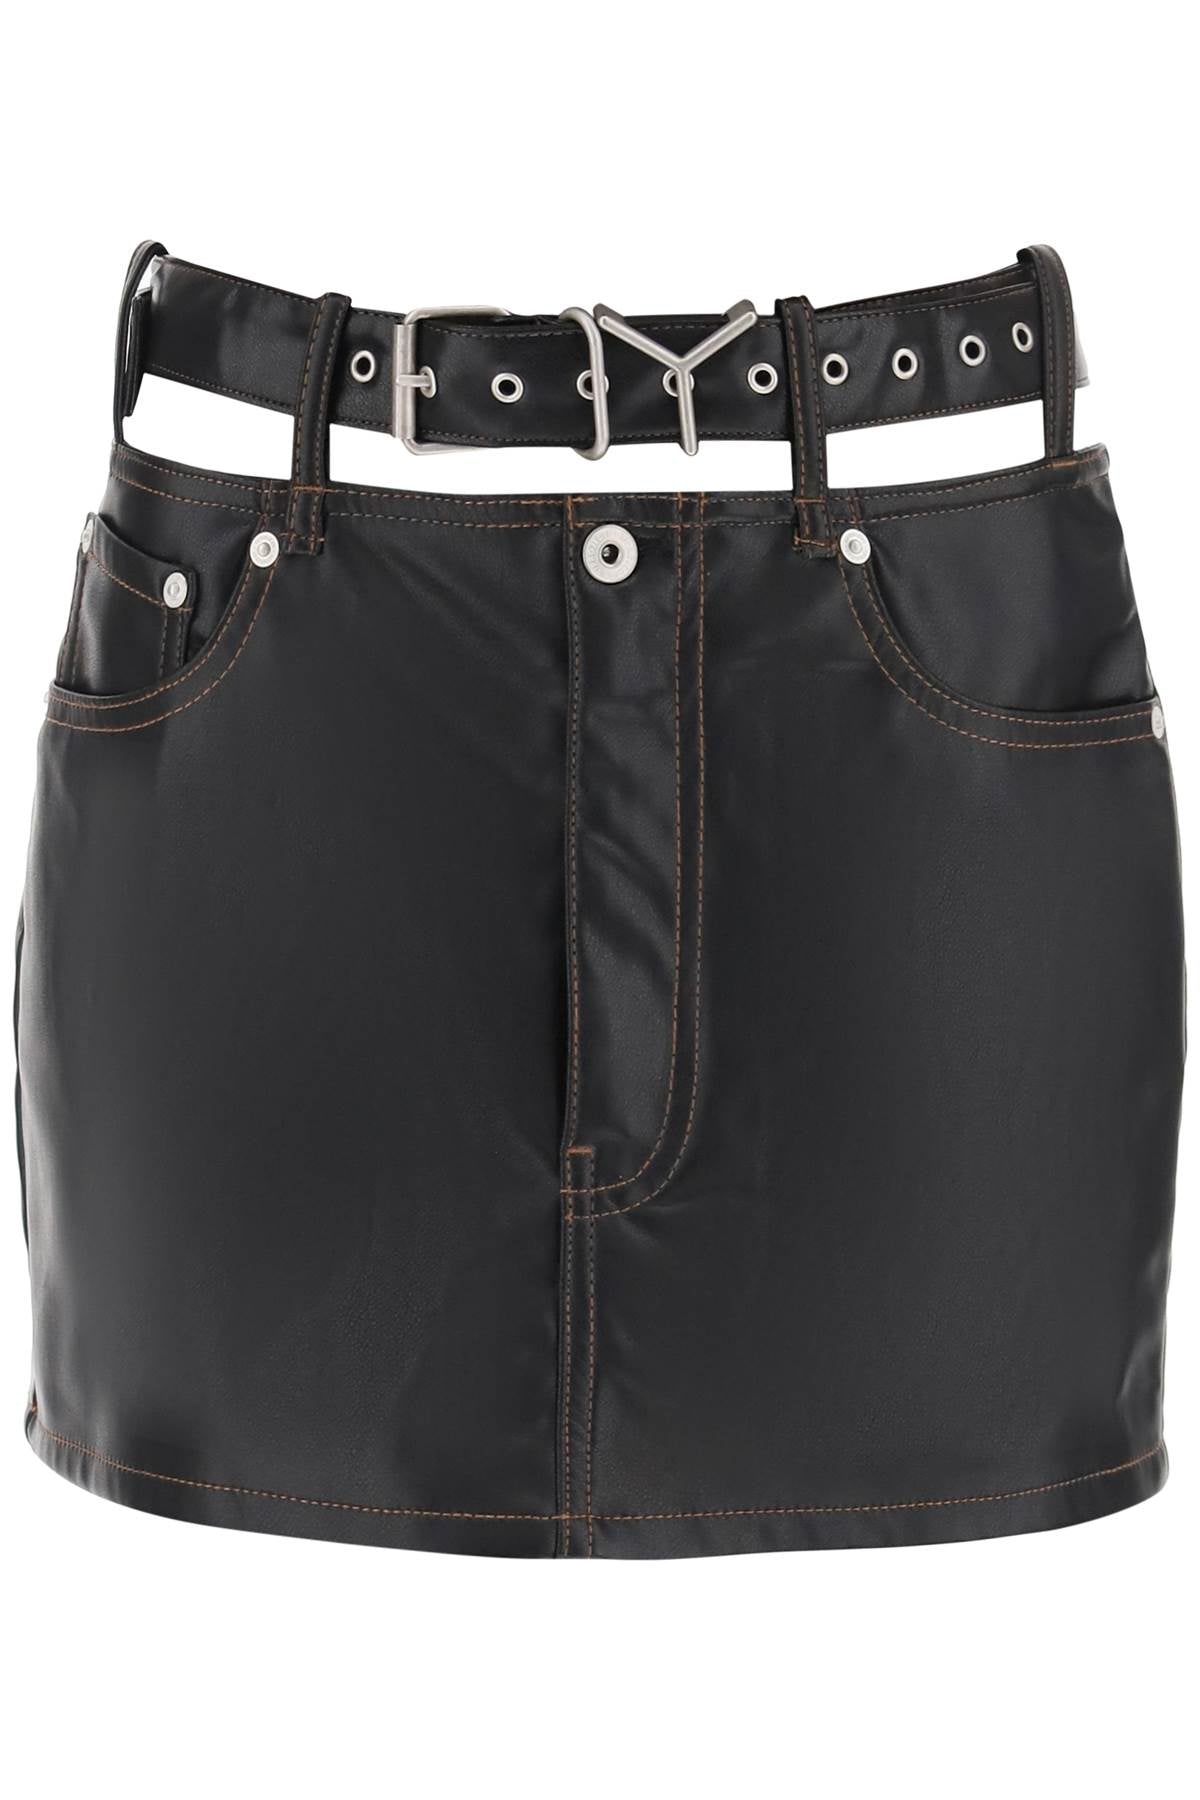 Y project y belt faux leather mini skirt-0